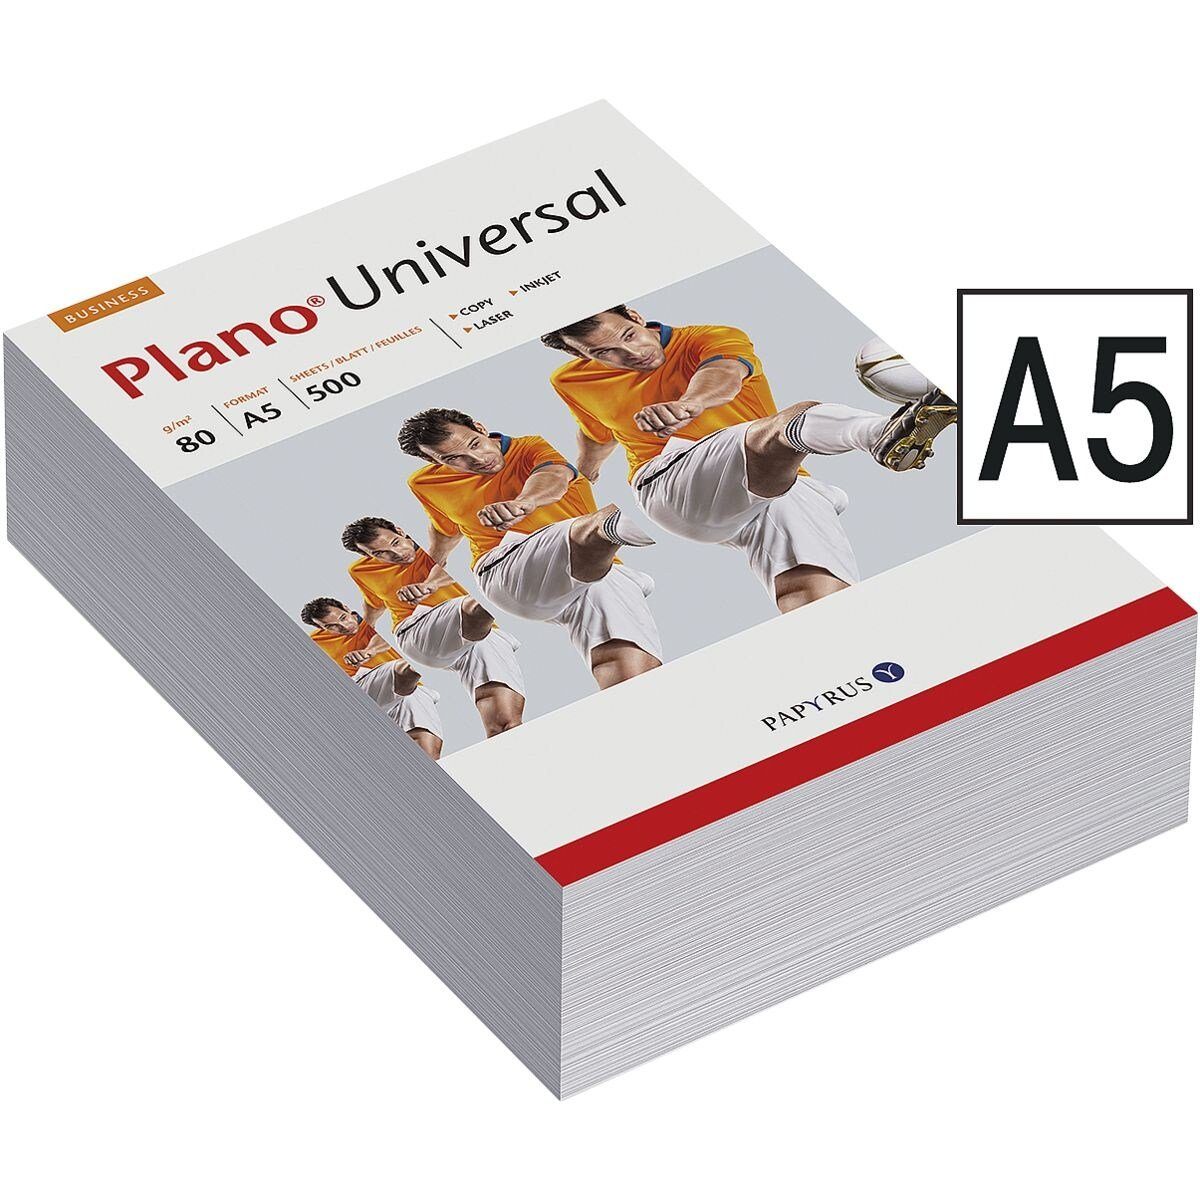 g/m², Universal, 500 PLANO Blatt 80 146 CIE, A5, DIN Format Druckerpapier